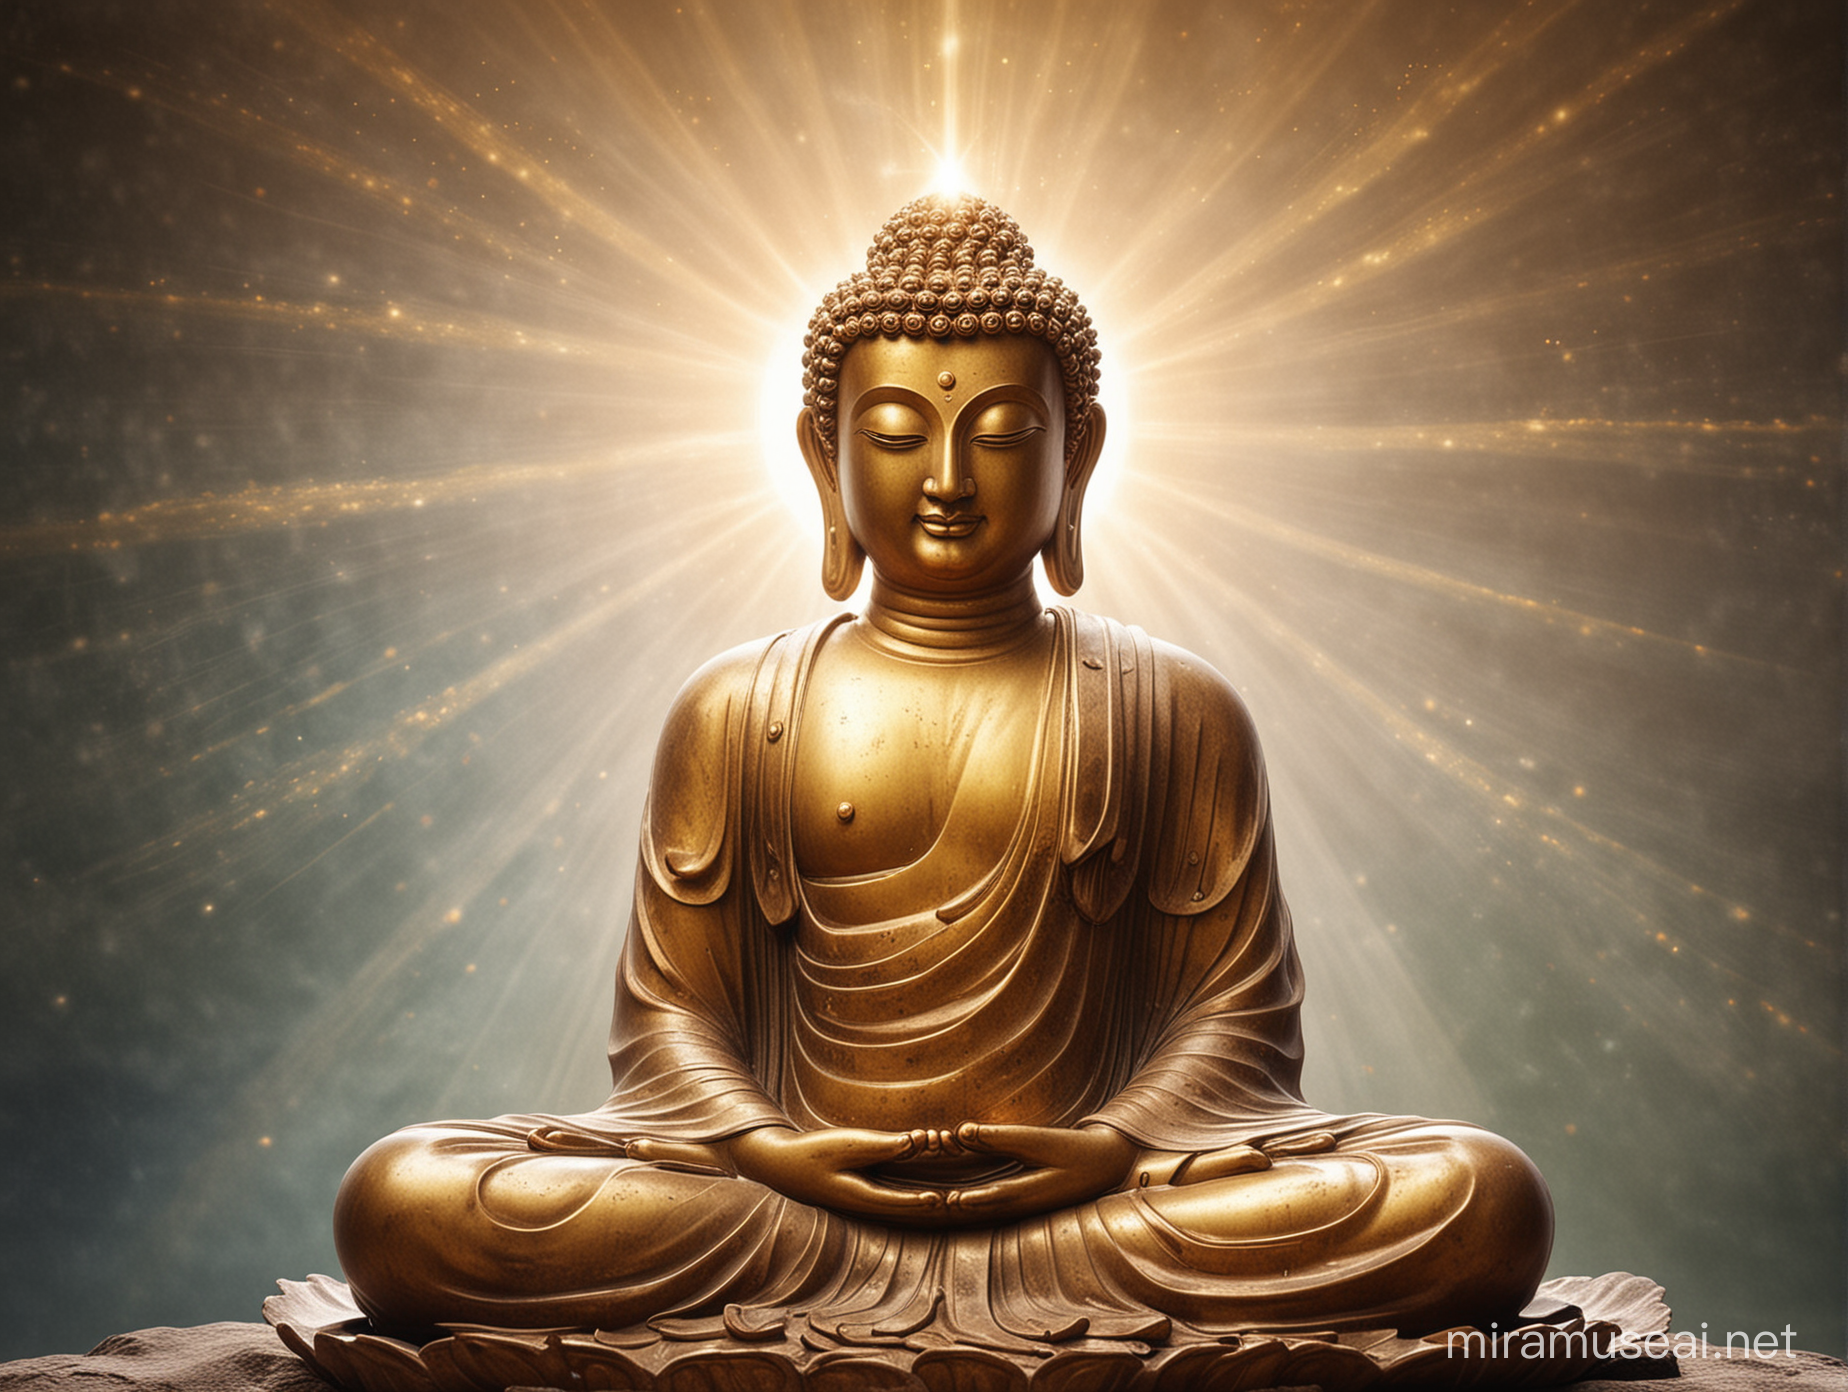 Radiant Buddha Illuminating the Realm with Miraculous Light